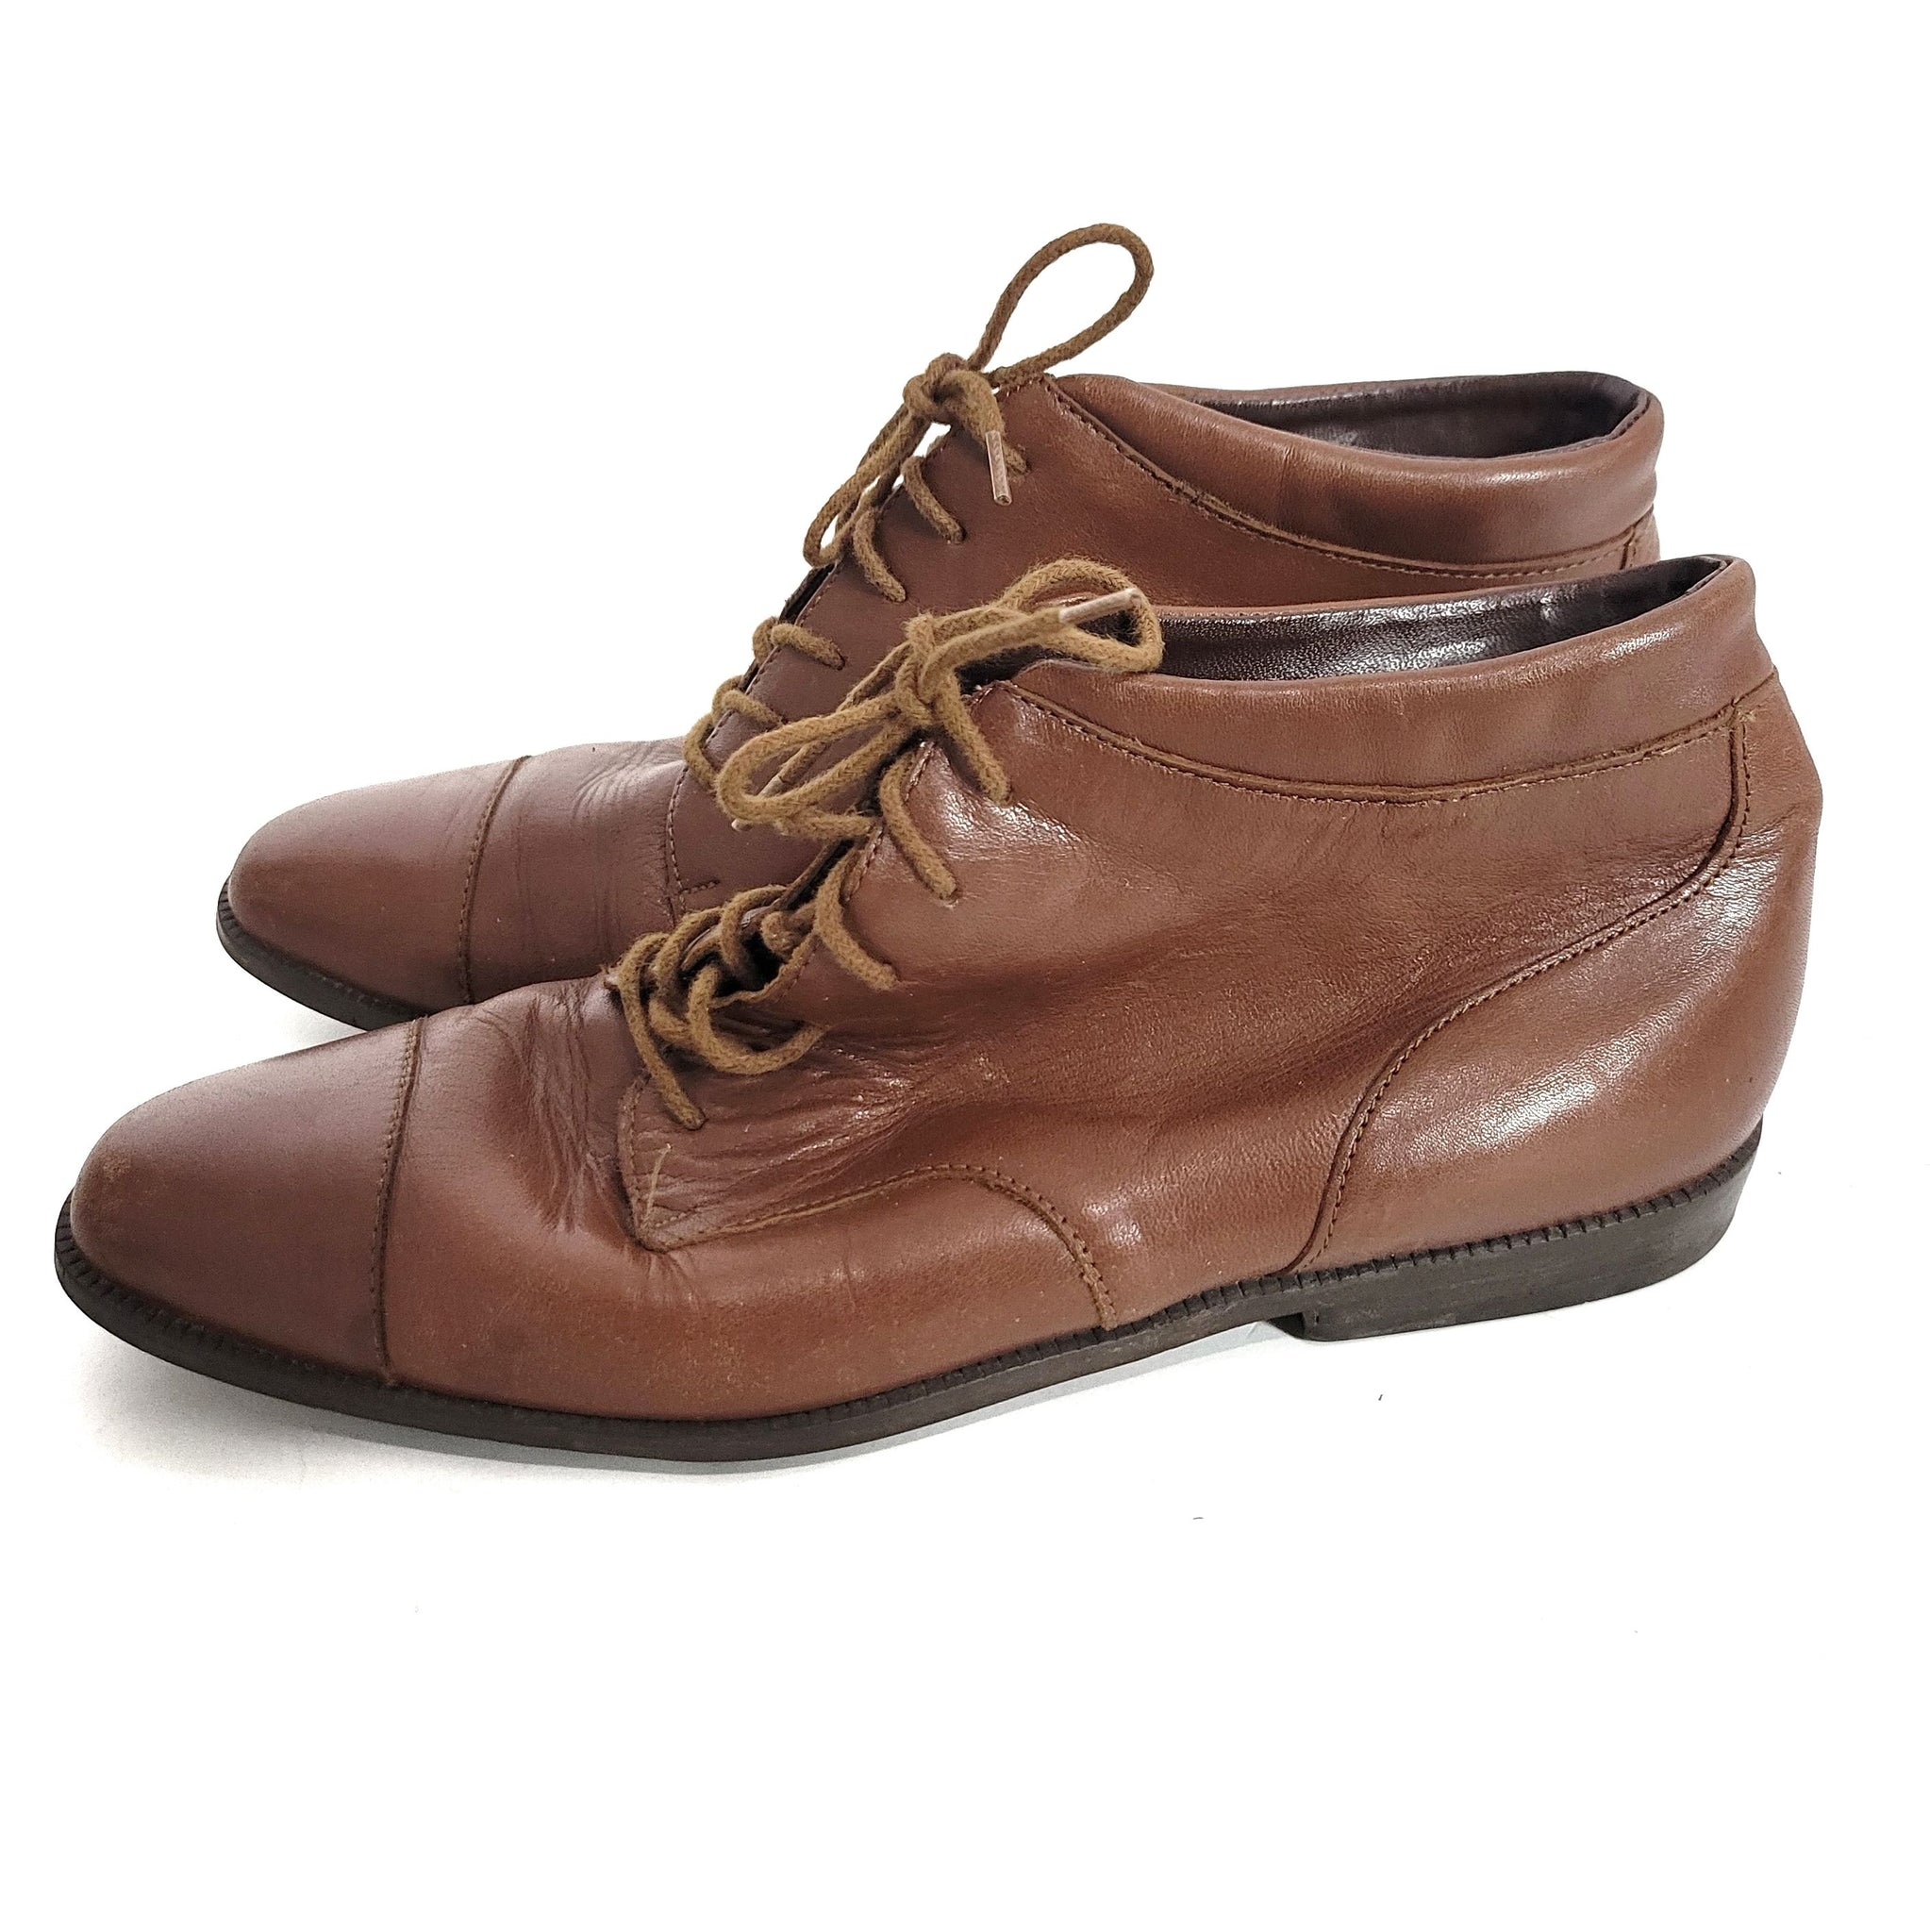 Vintage Naturalizer Prairie Boots Size 8.5